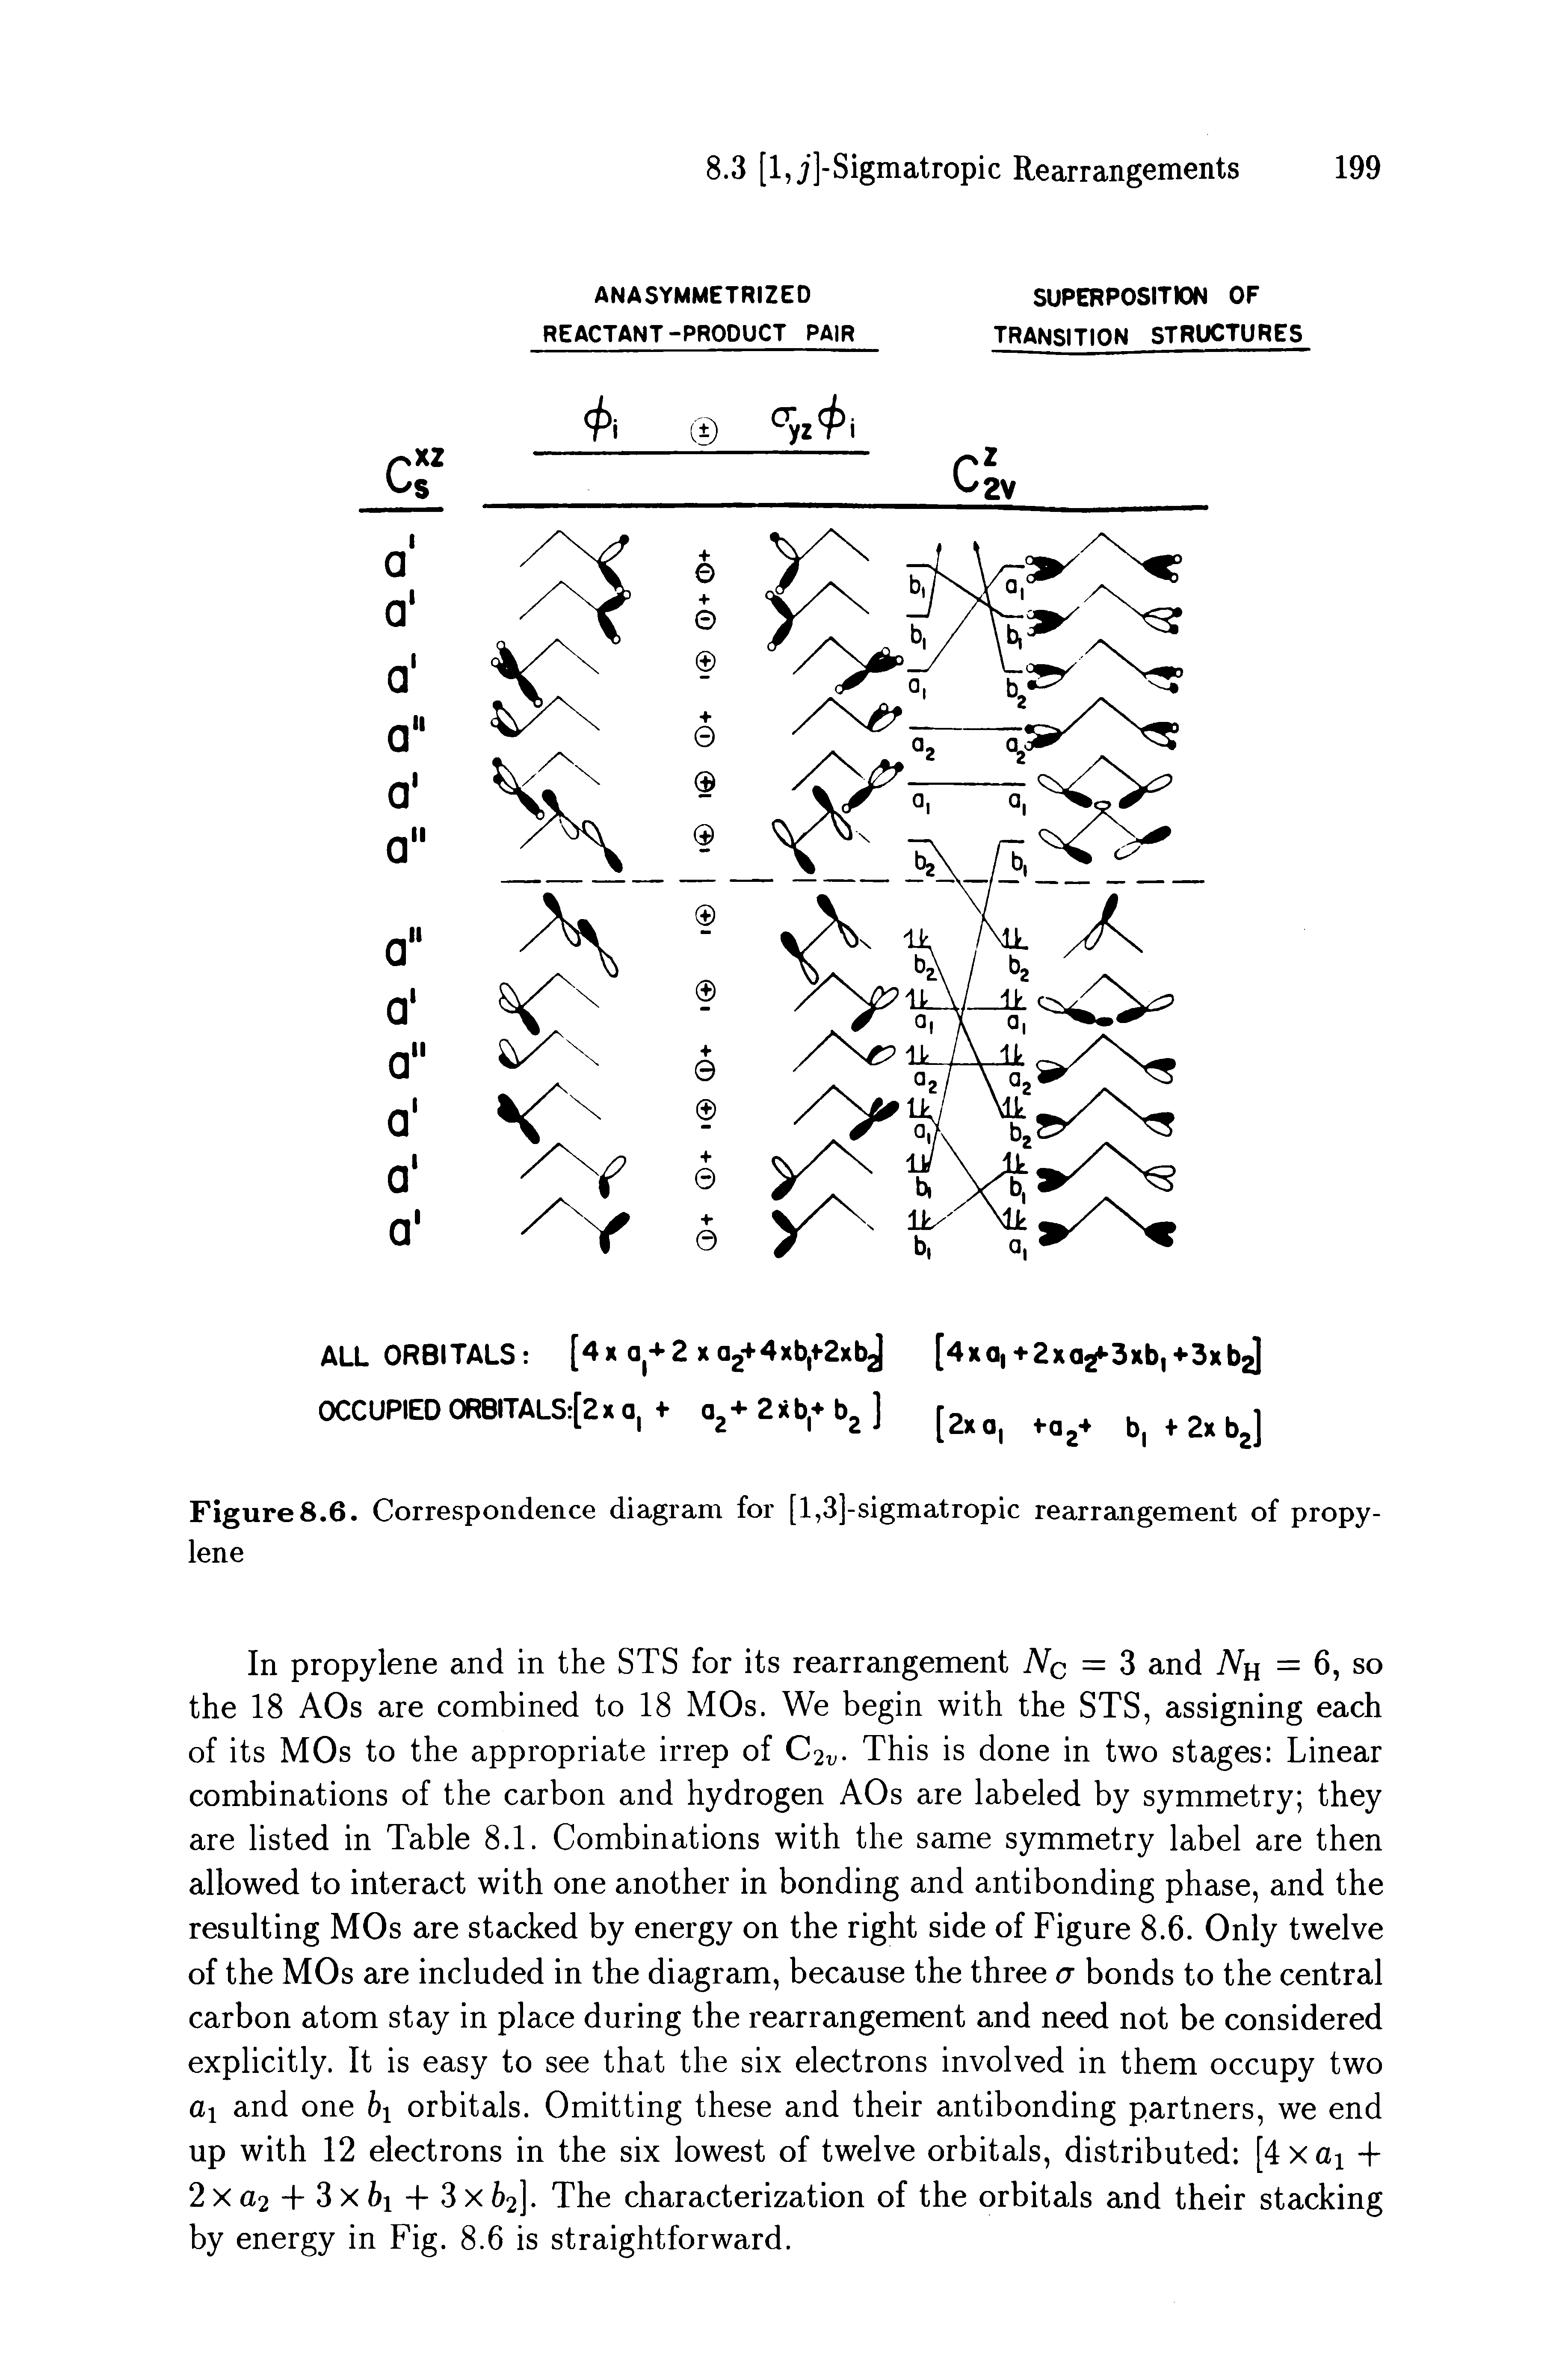 Figure8.6. Correspondence diagram for [l,3]-sigmatropic rearrangement of propylene...